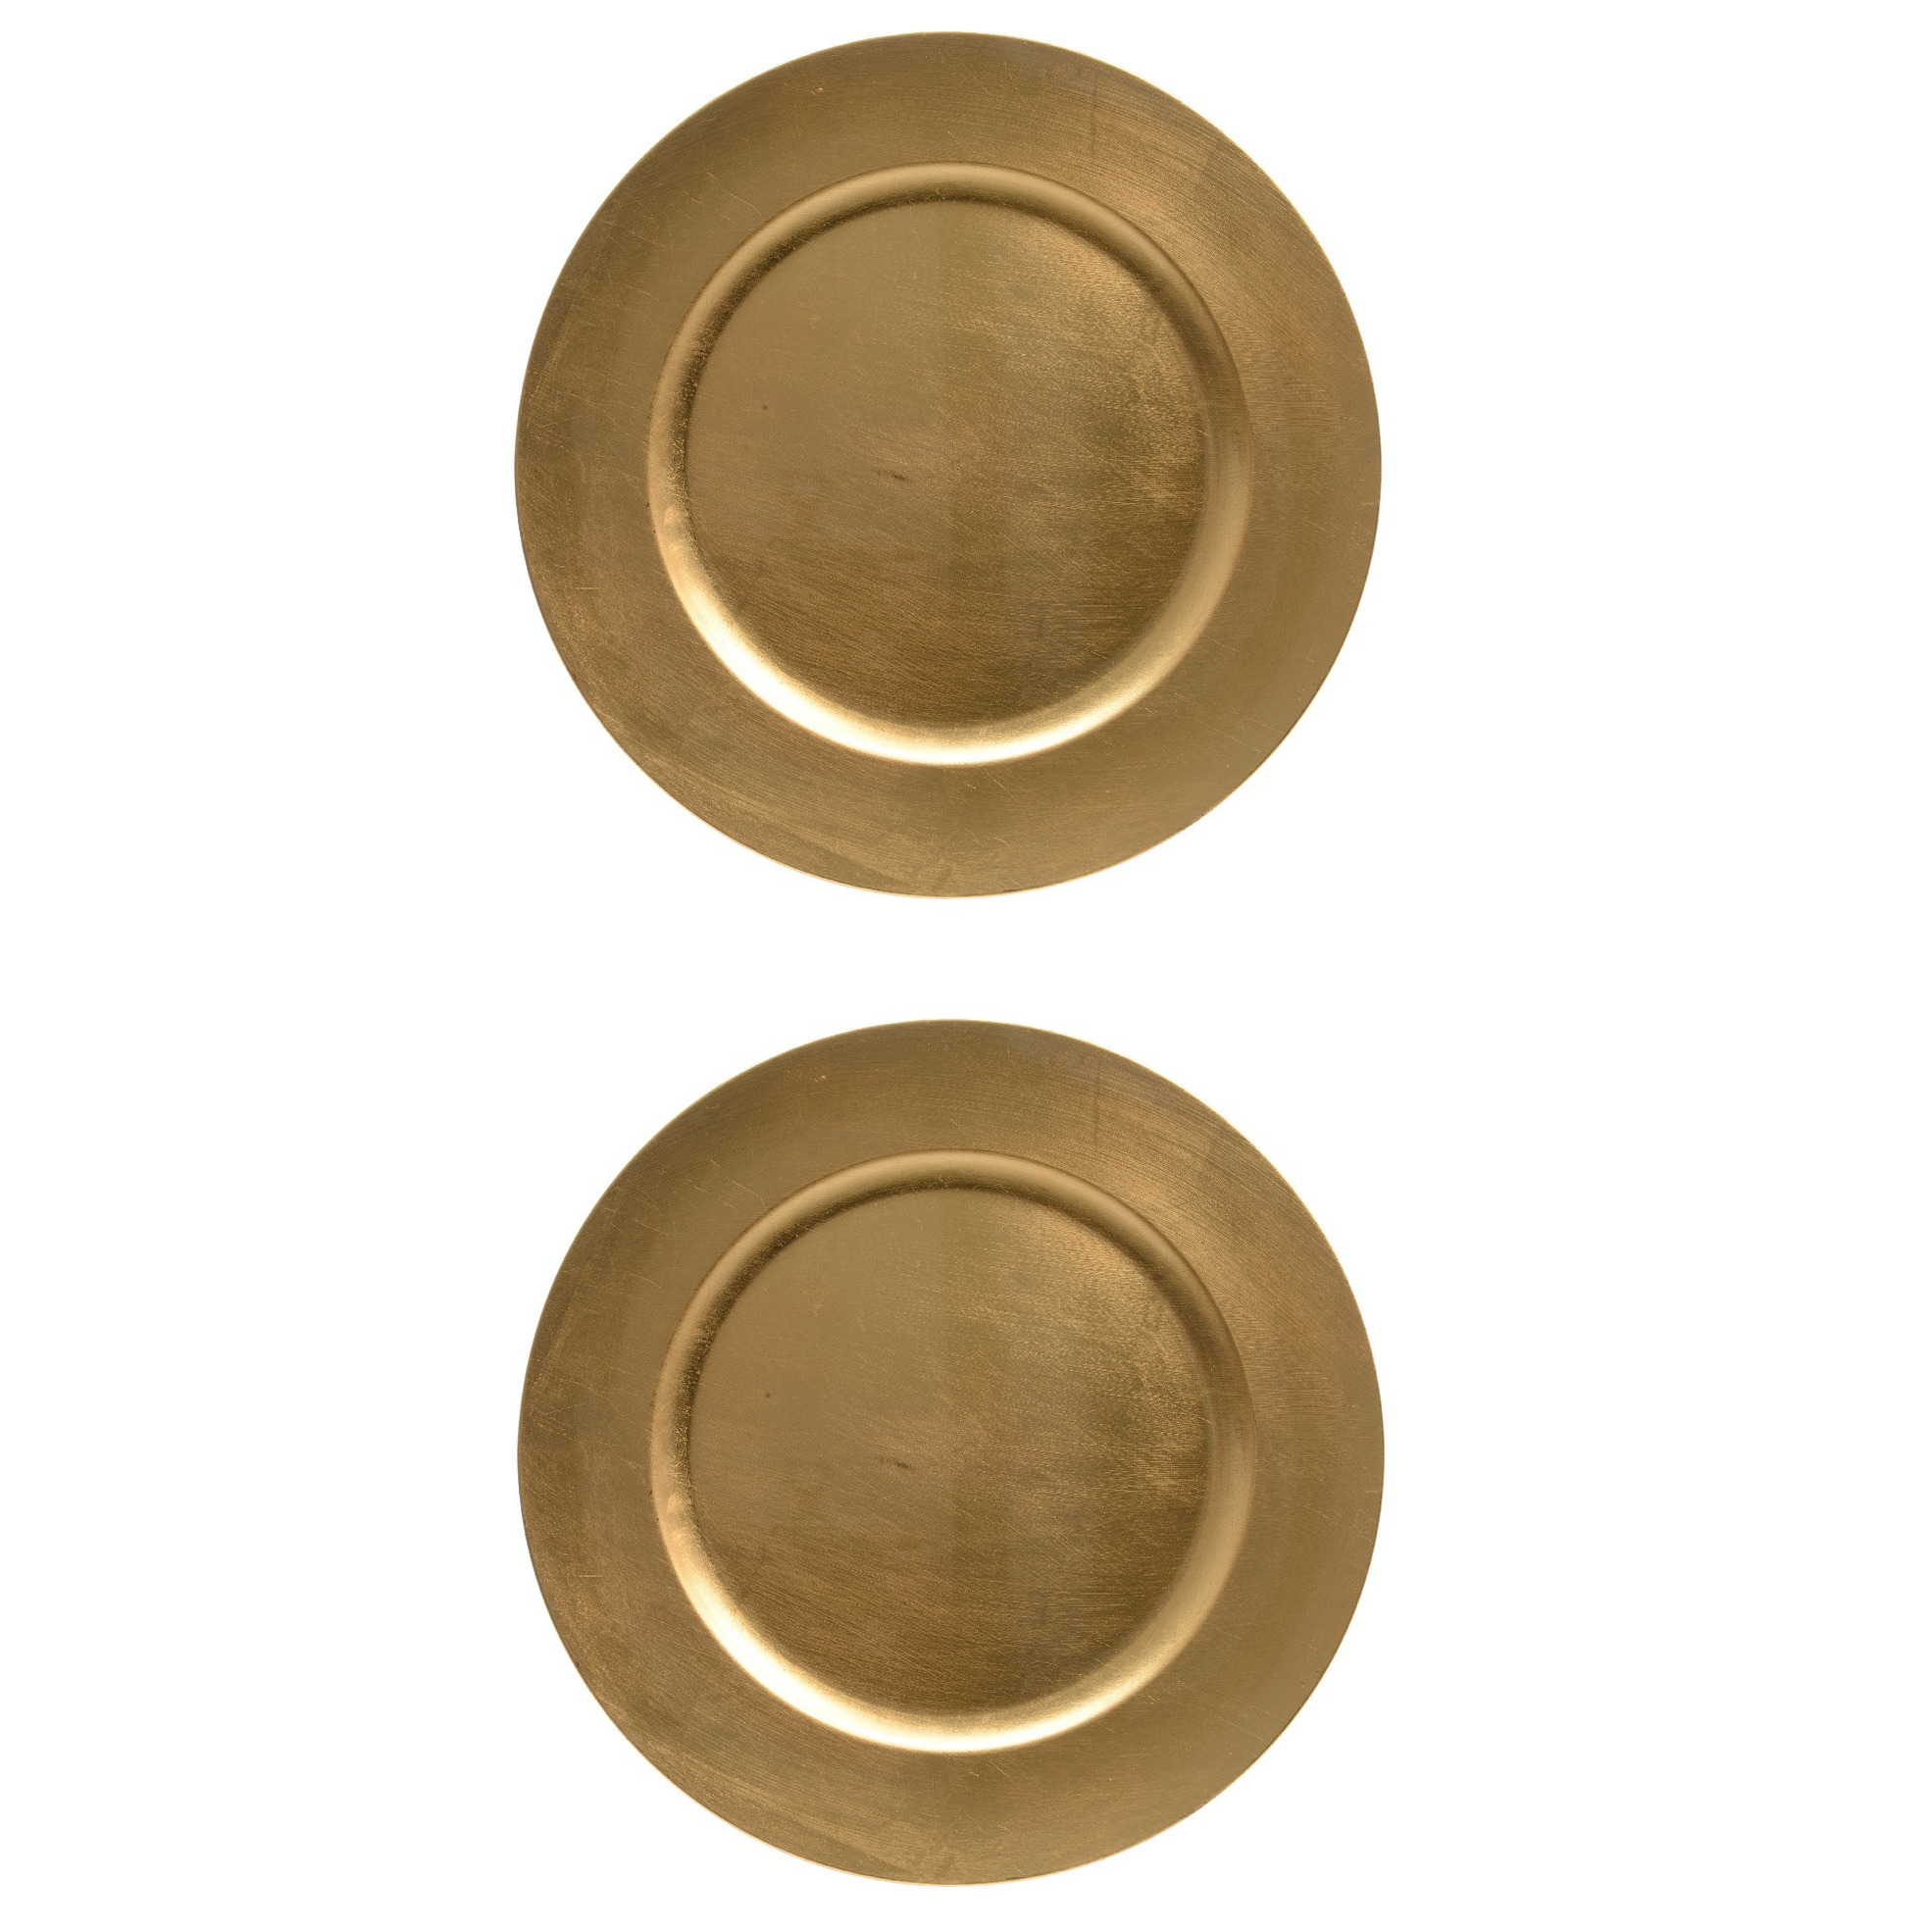 12x stuks diner borden-onderborden goud glimmend 33 cm